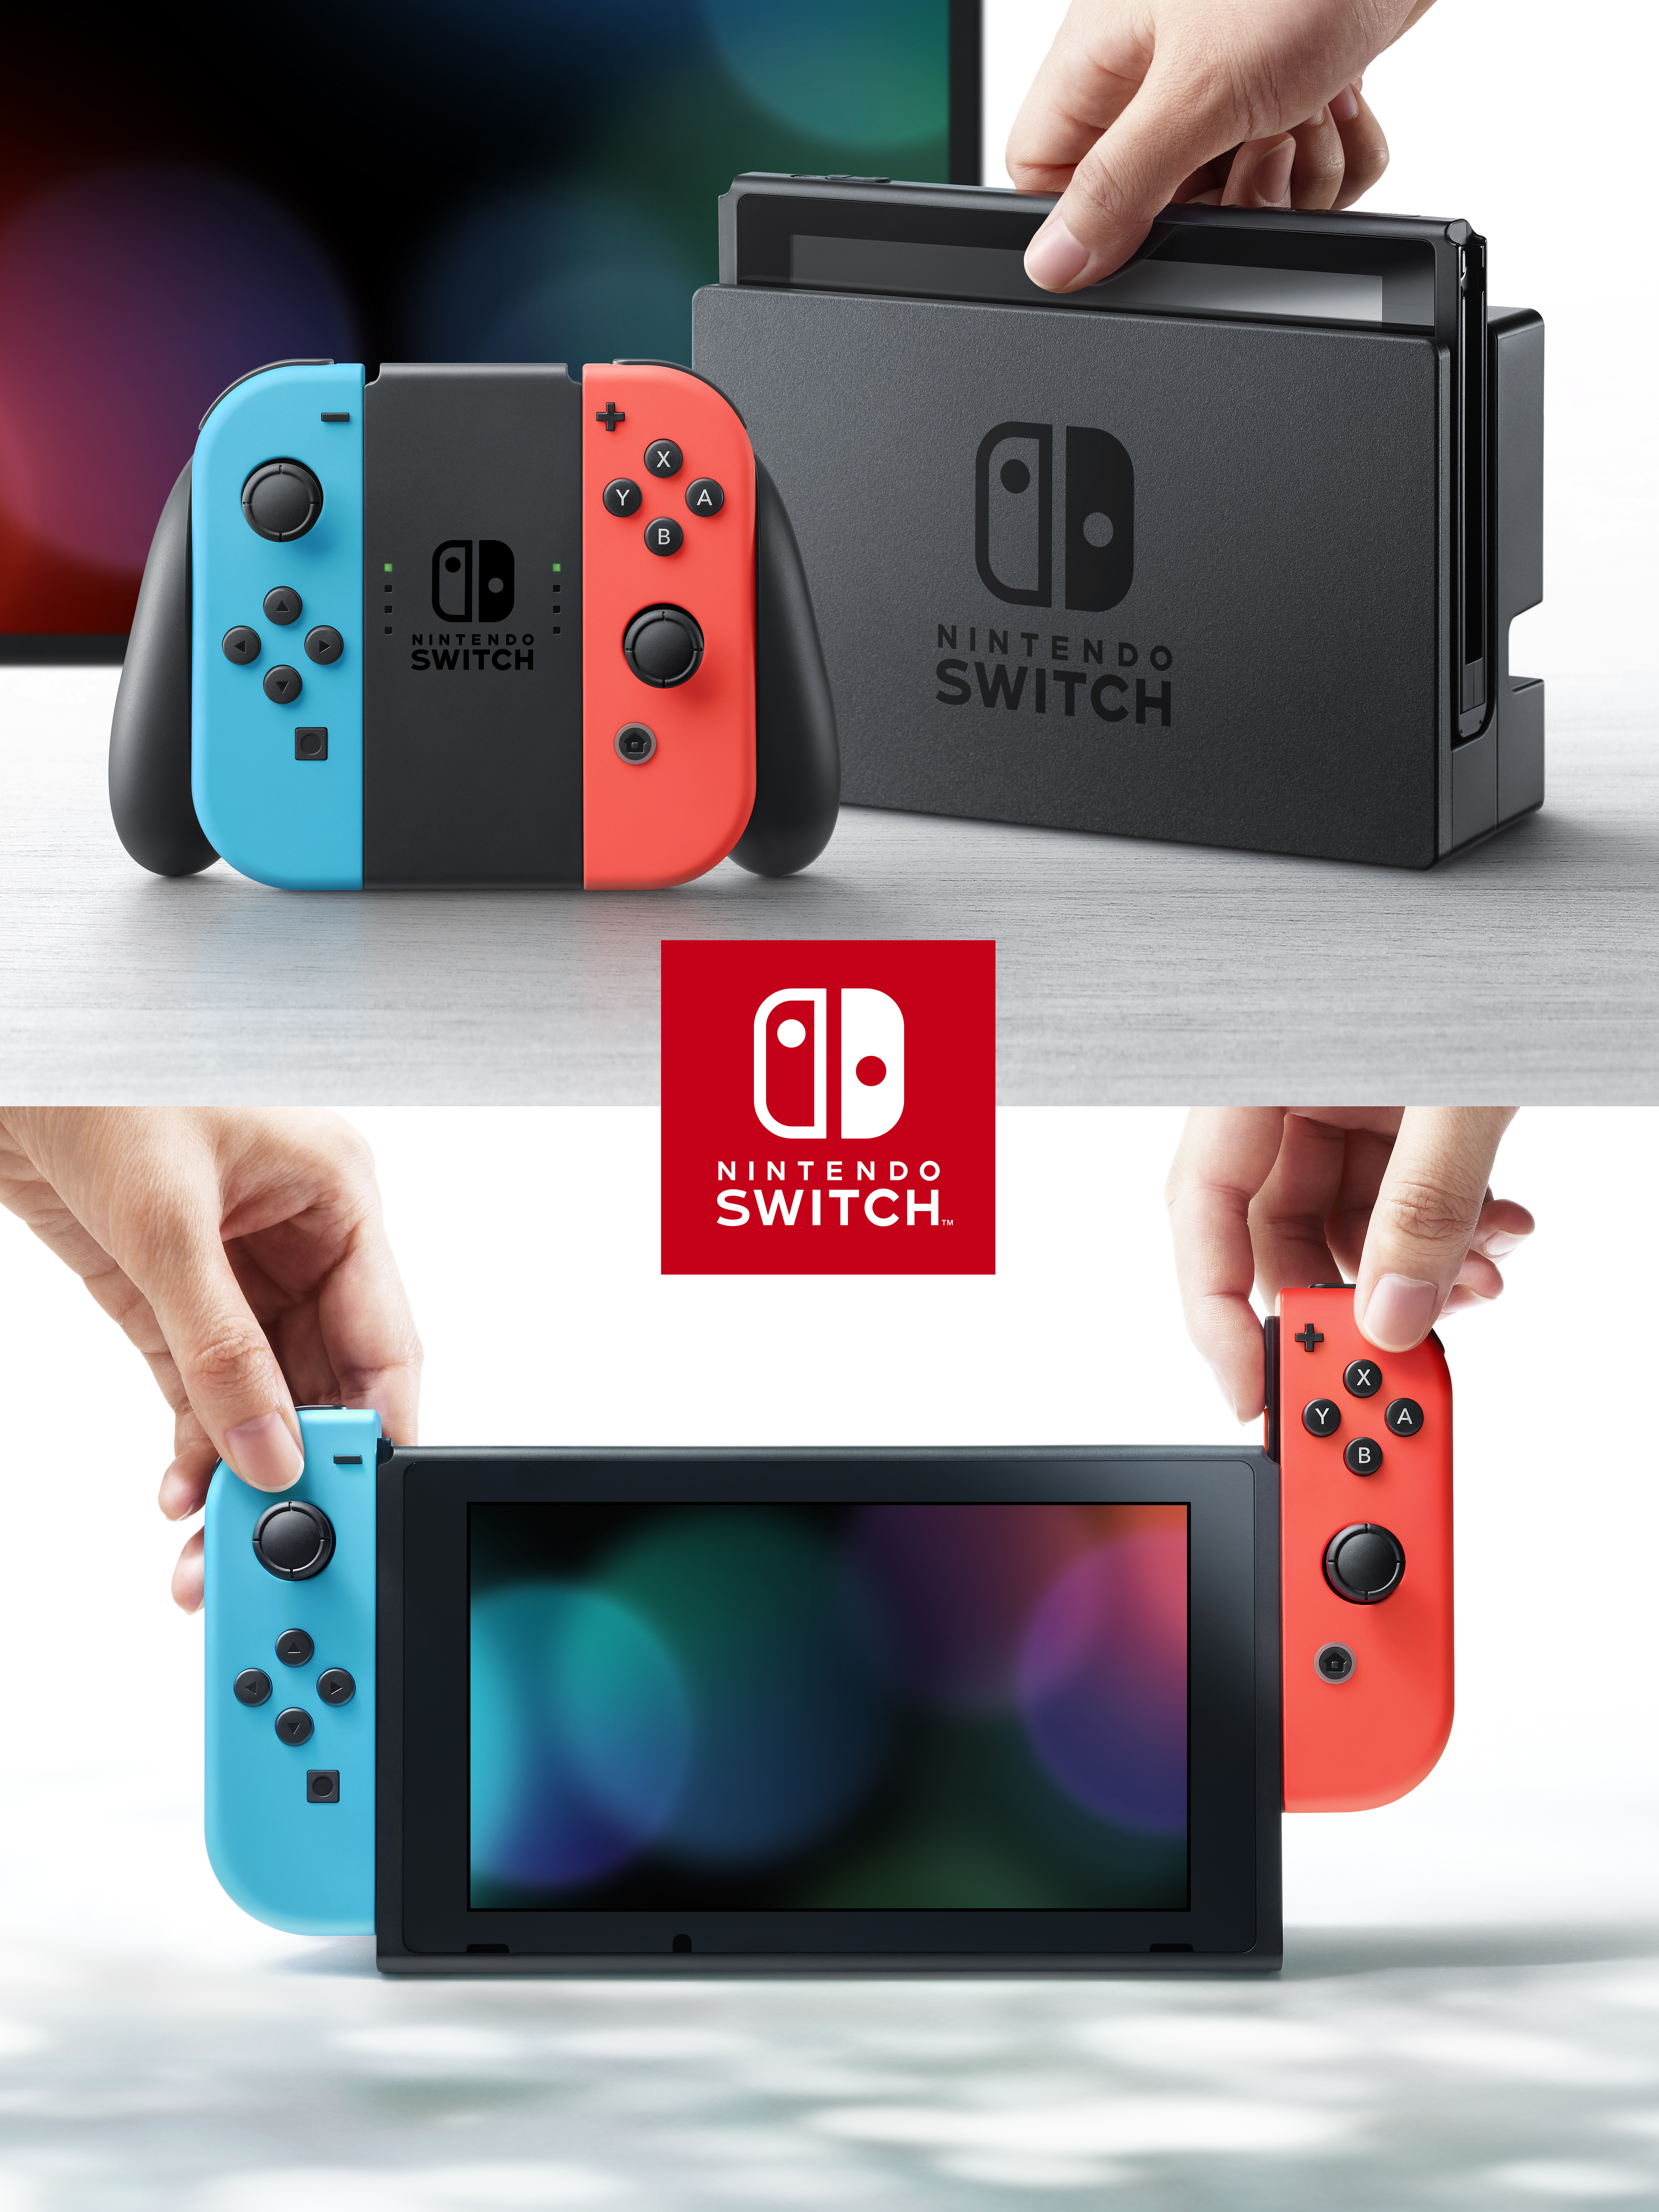 nintendo switch similar console